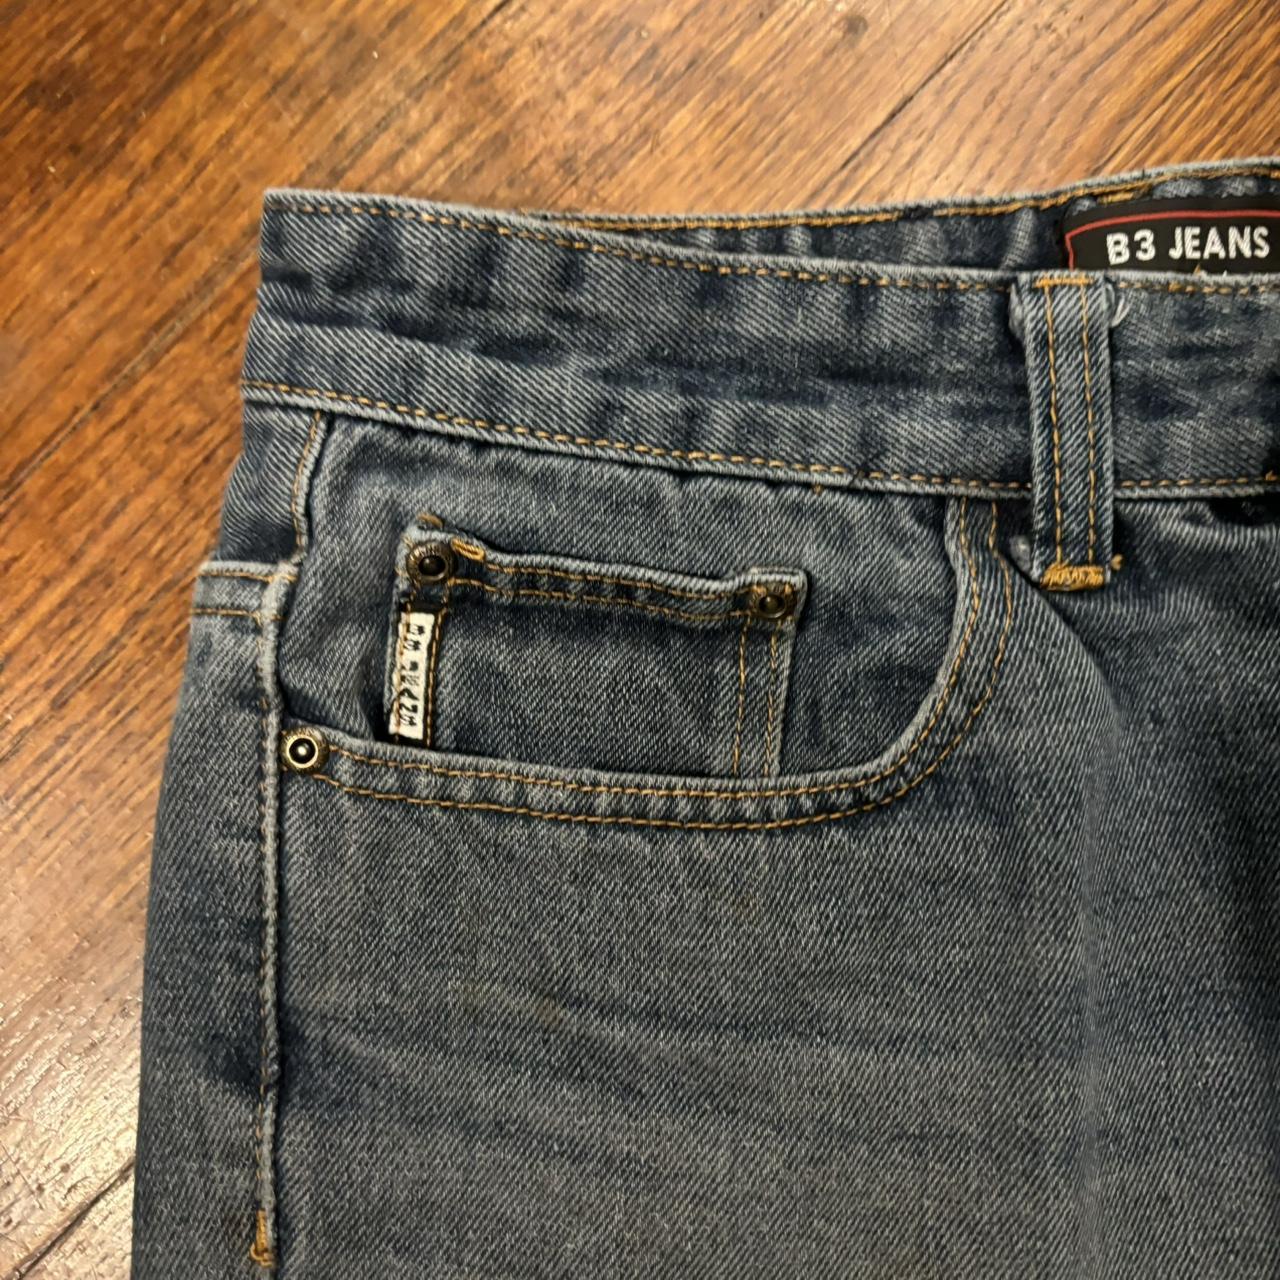 B3 jeans distressed loose fit / size 34 inseam 30... - Depop